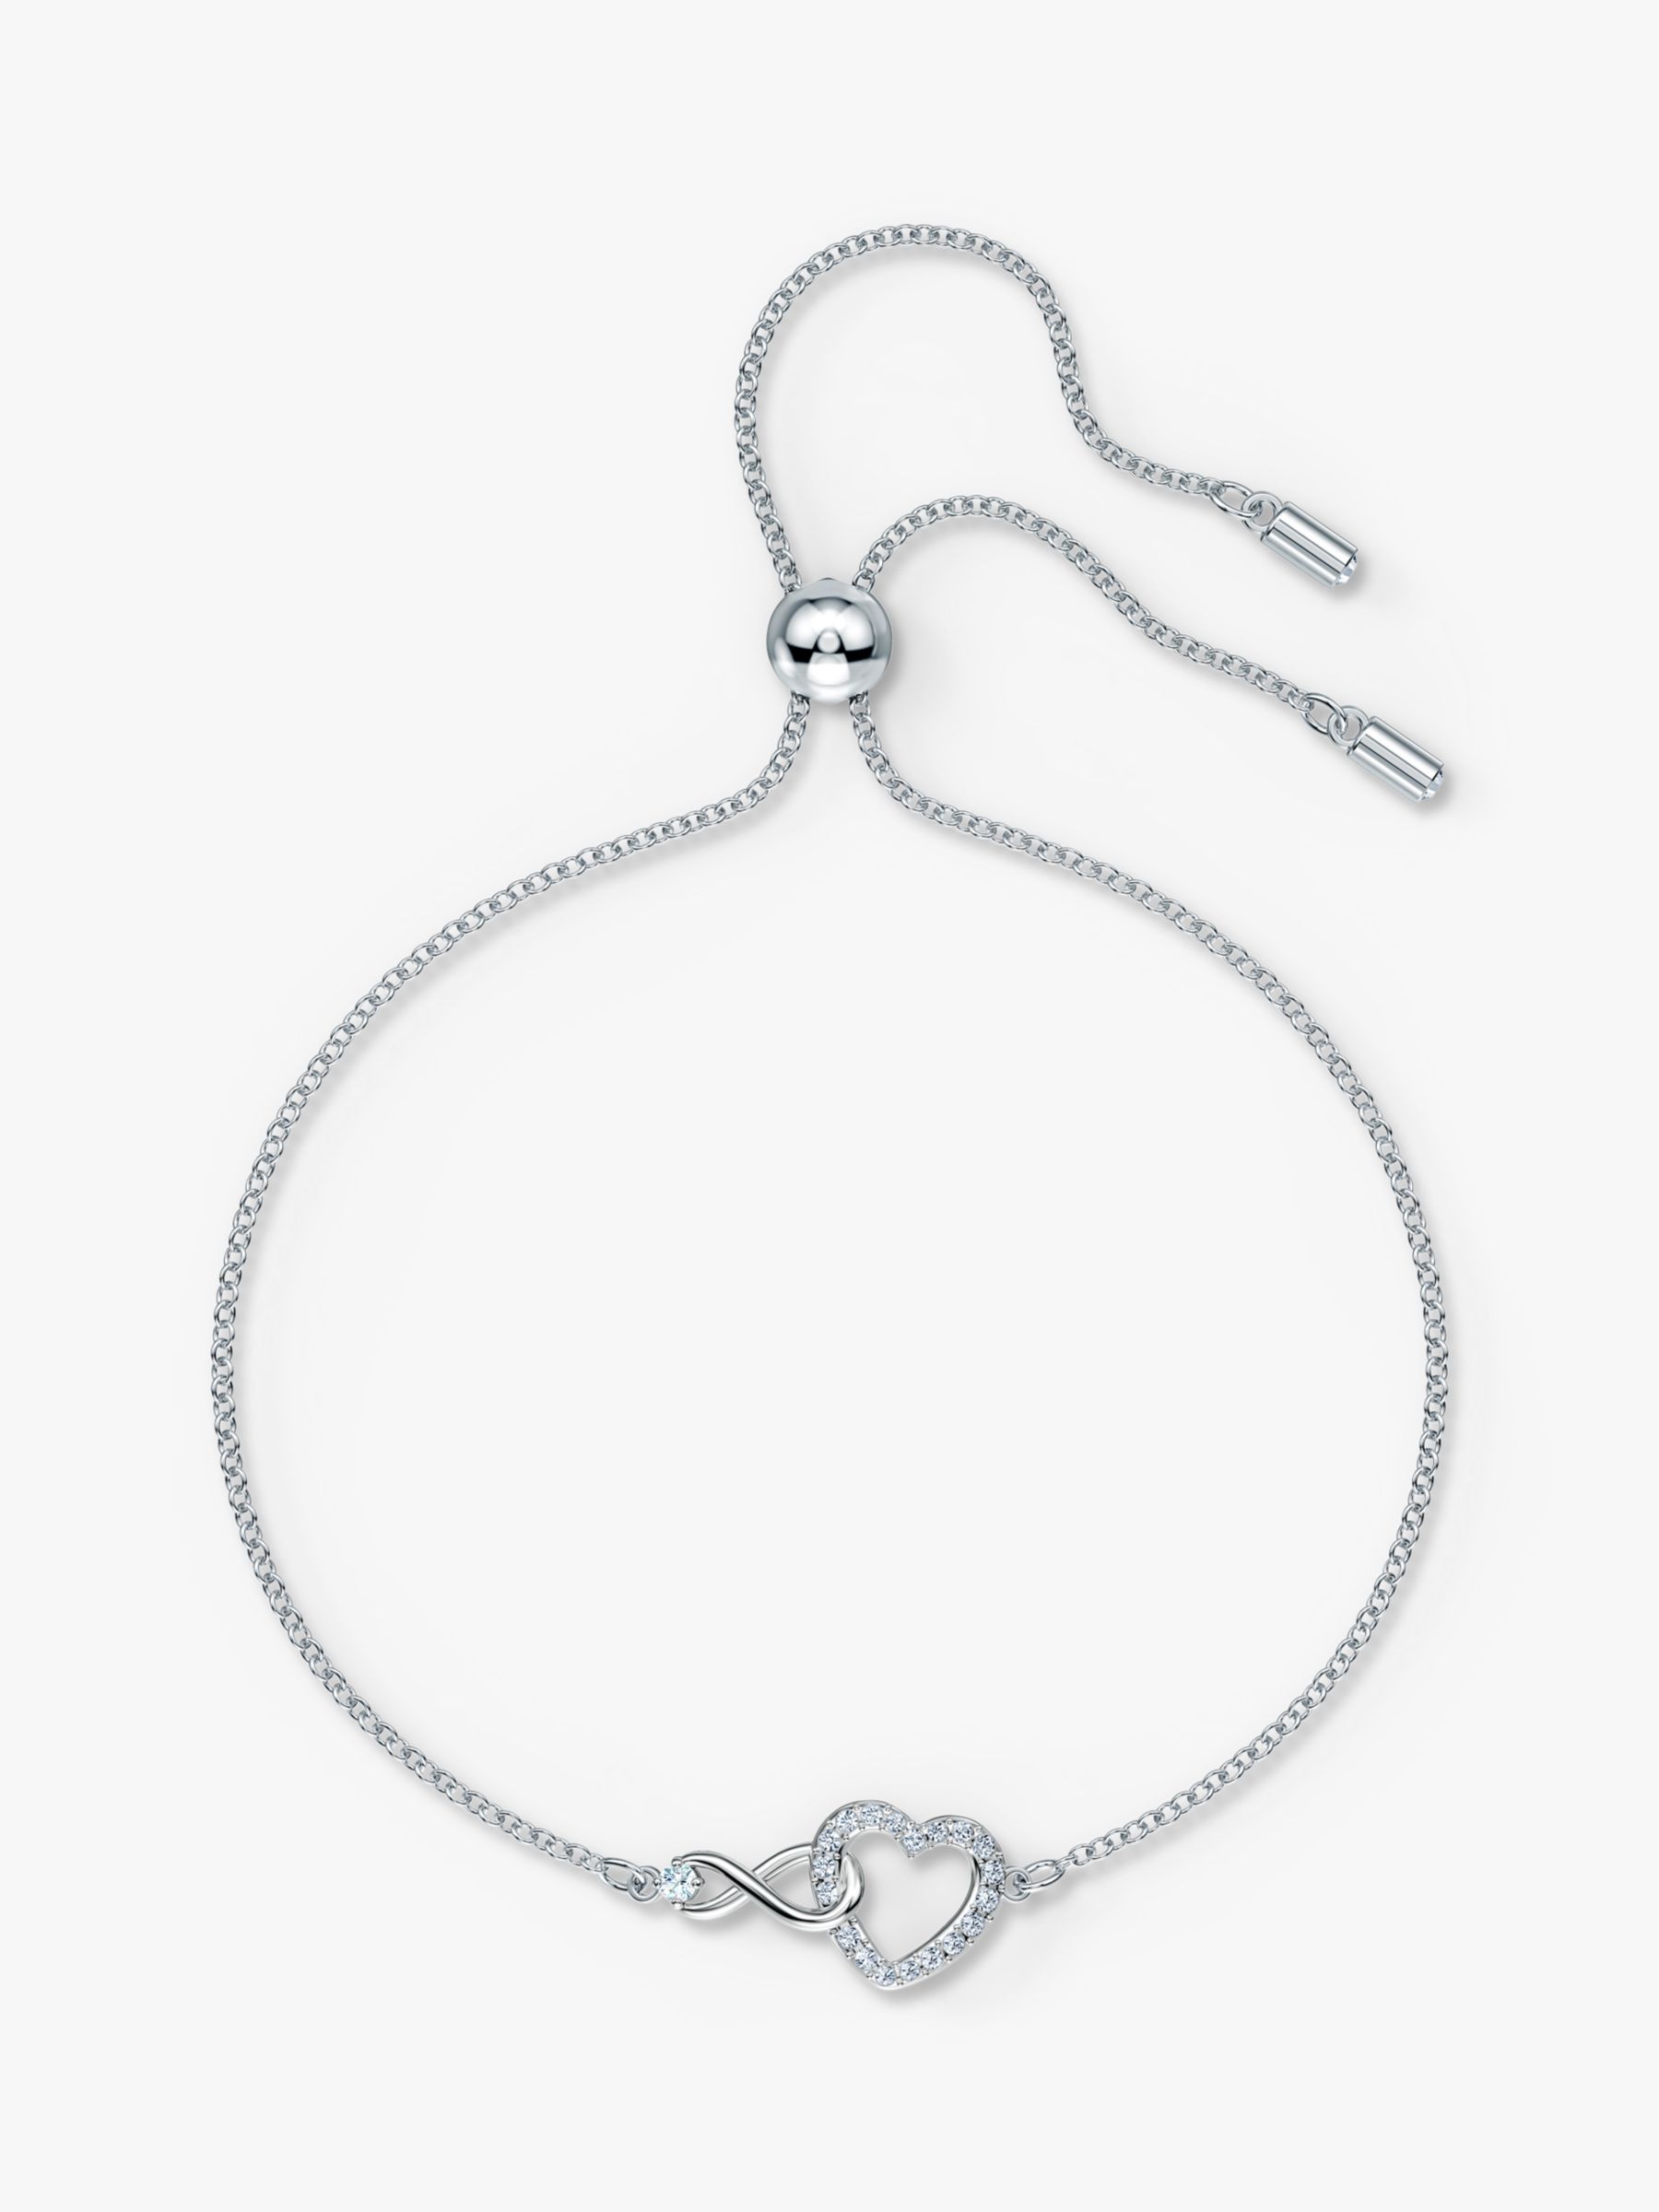 Swarovski Crystal Infinity and Heart Chain Bracelet, Silver